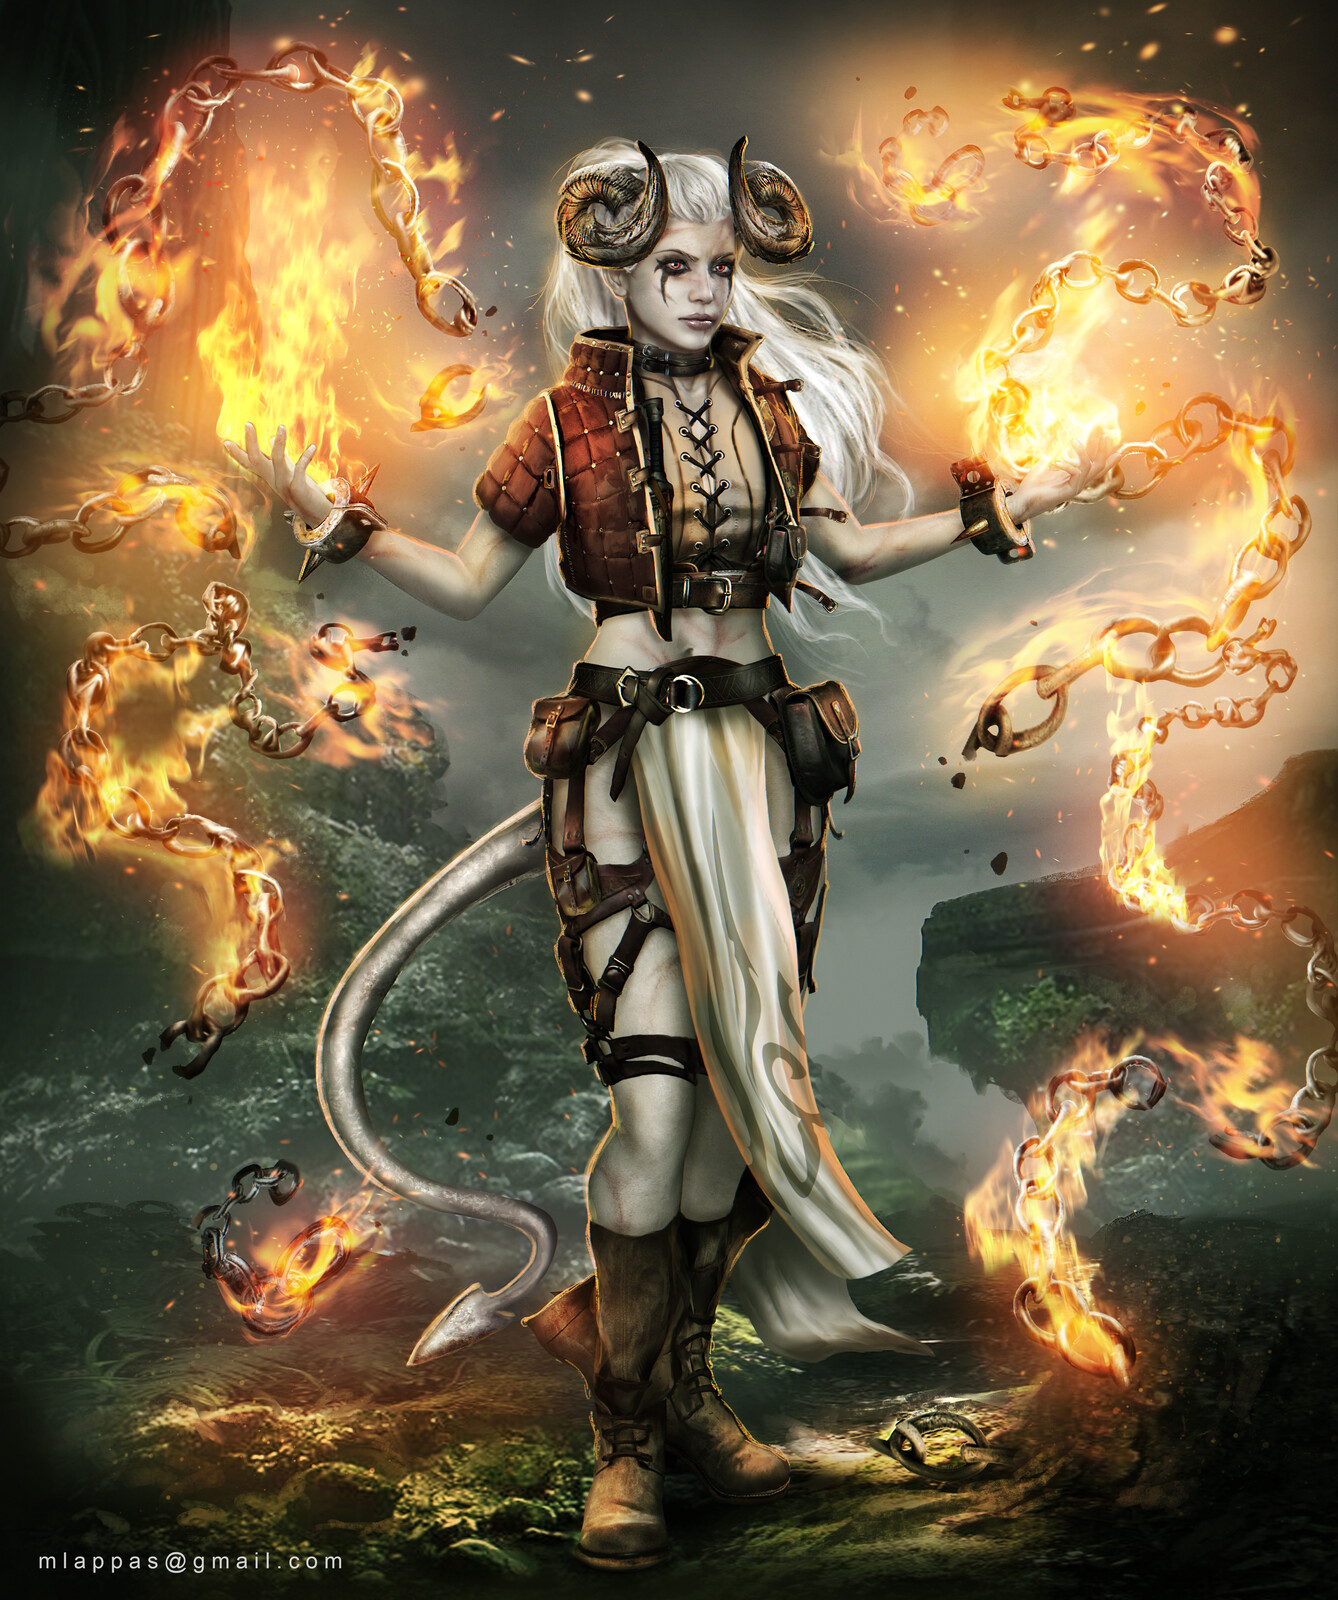 Keahi the dreconic sorceress-artwork commission